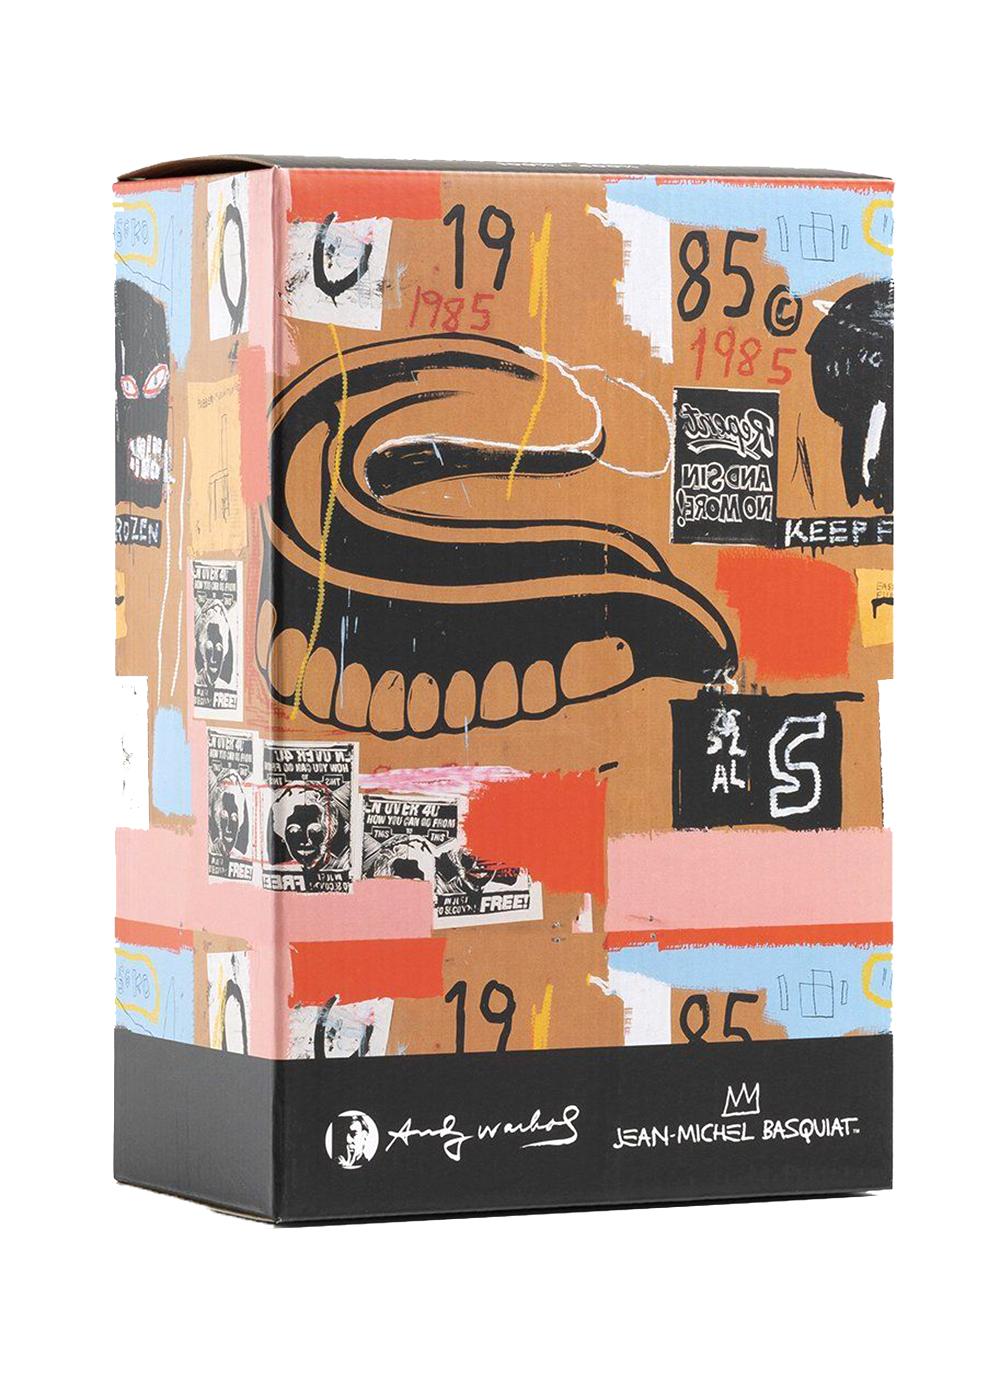 Warhol Basquiat Bearbrick 400% figure (Warhol Basquiat BE@RBRICK) - Pop Art Sculpture by after Jean-Michel Basquiat